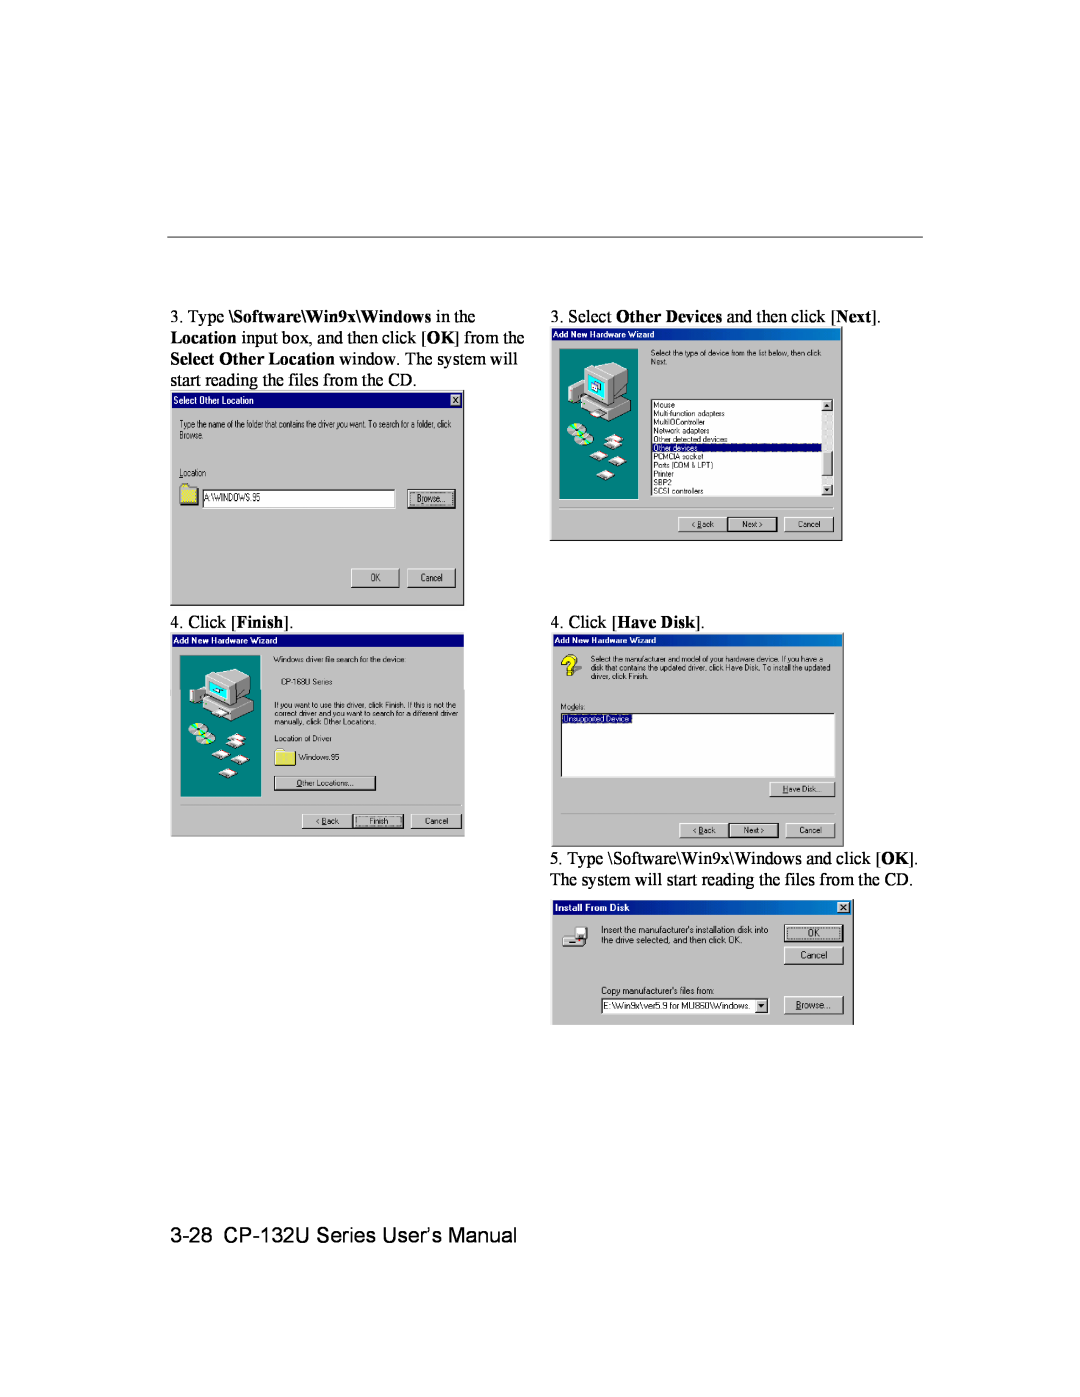 Moxa Technologies user manual 3-28 CP-132U Series User’s Manual, Type \Software\Win9x\Windows in the 